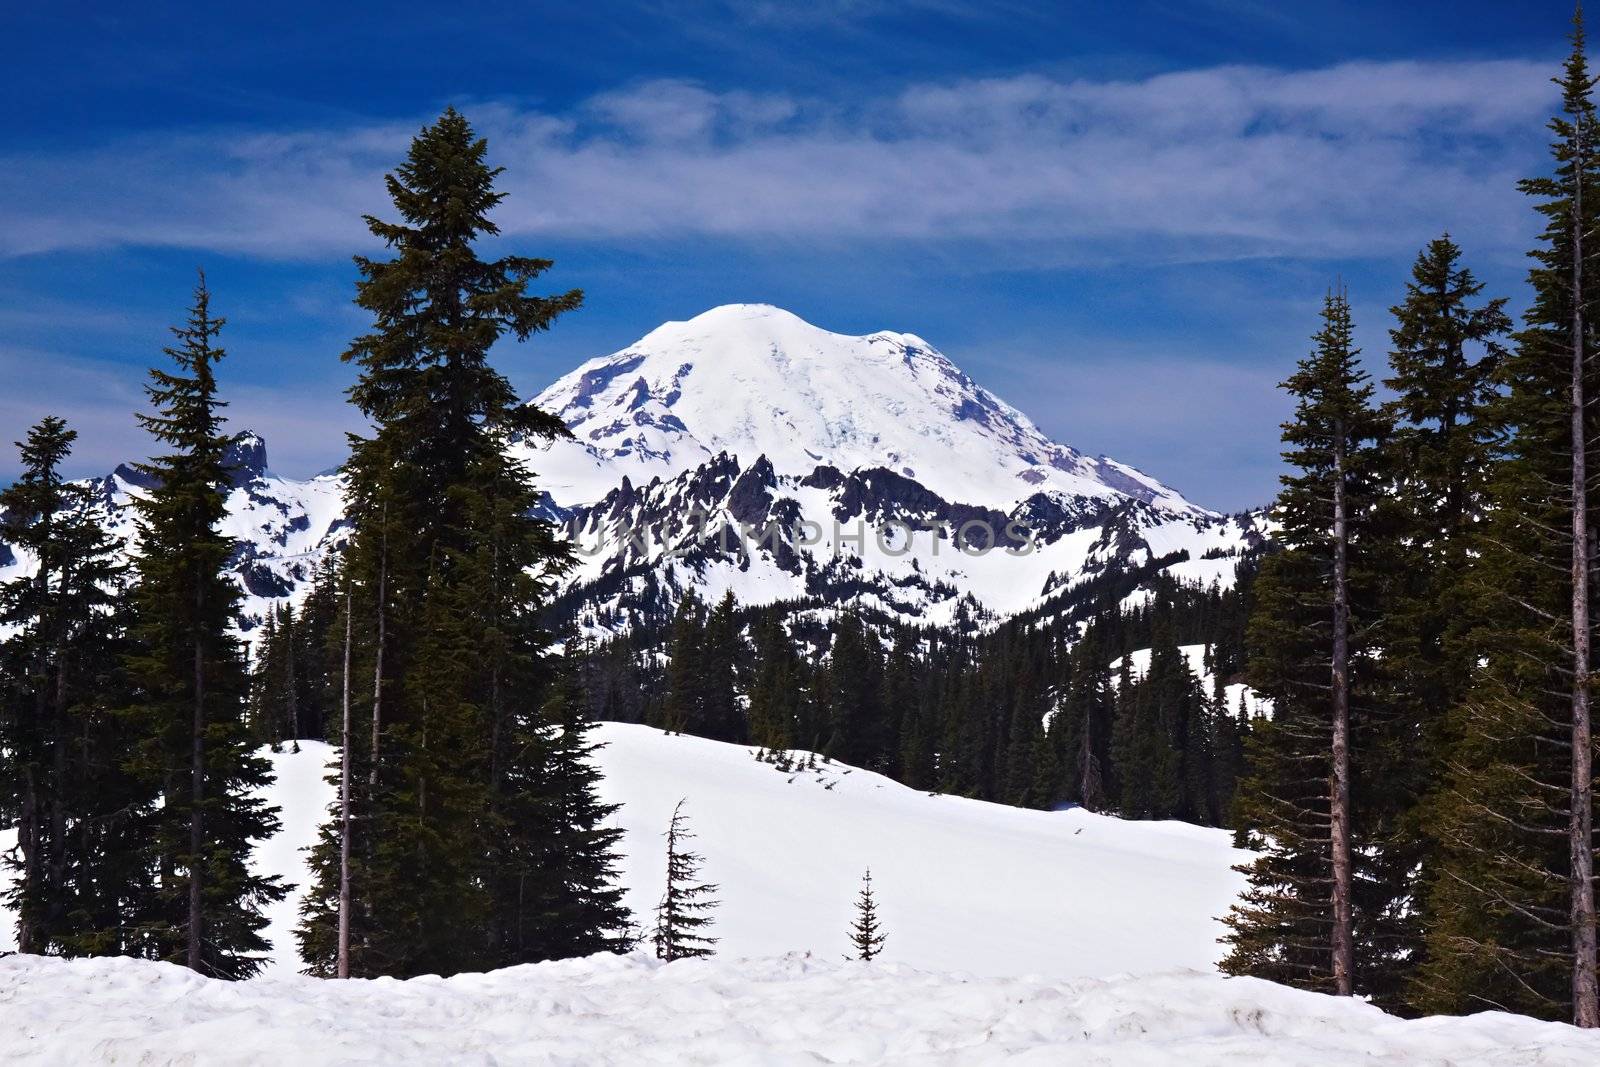 Snowcapped Mount Rainier by LoonChild